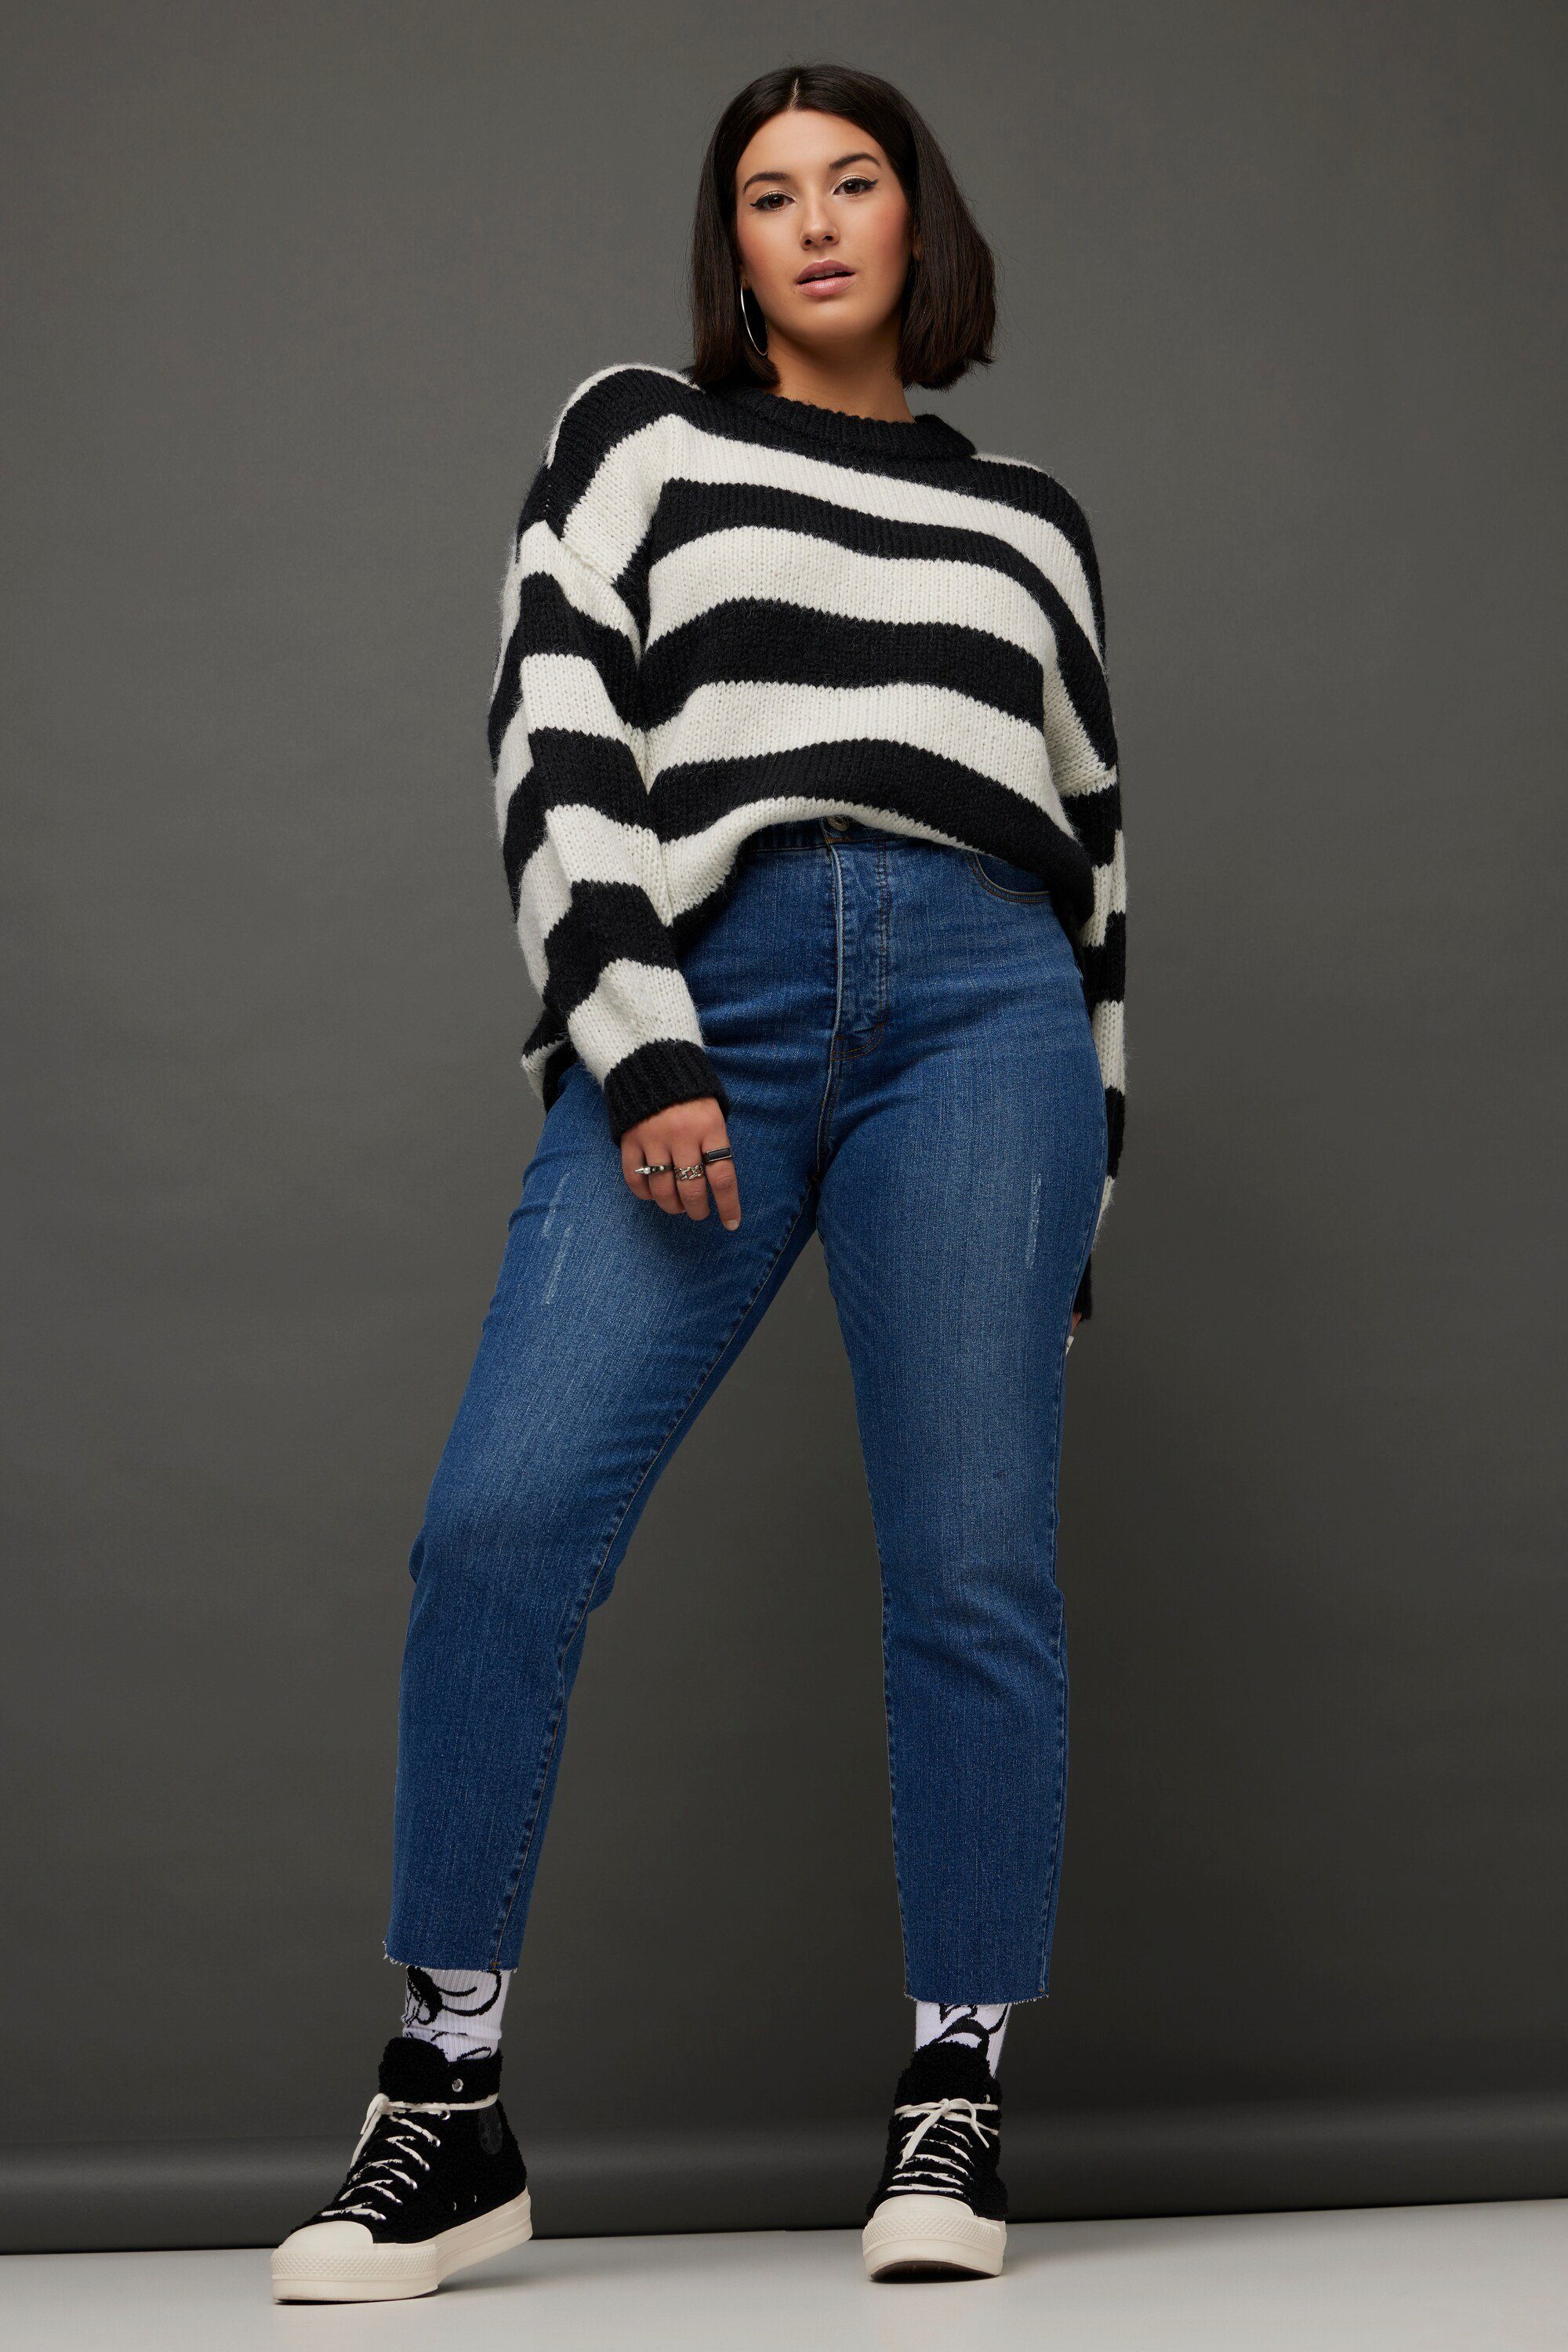 geschnittener blue Jeans Funktionshose 5-Pocket Studio denim Mom Saum dark gerade Untold